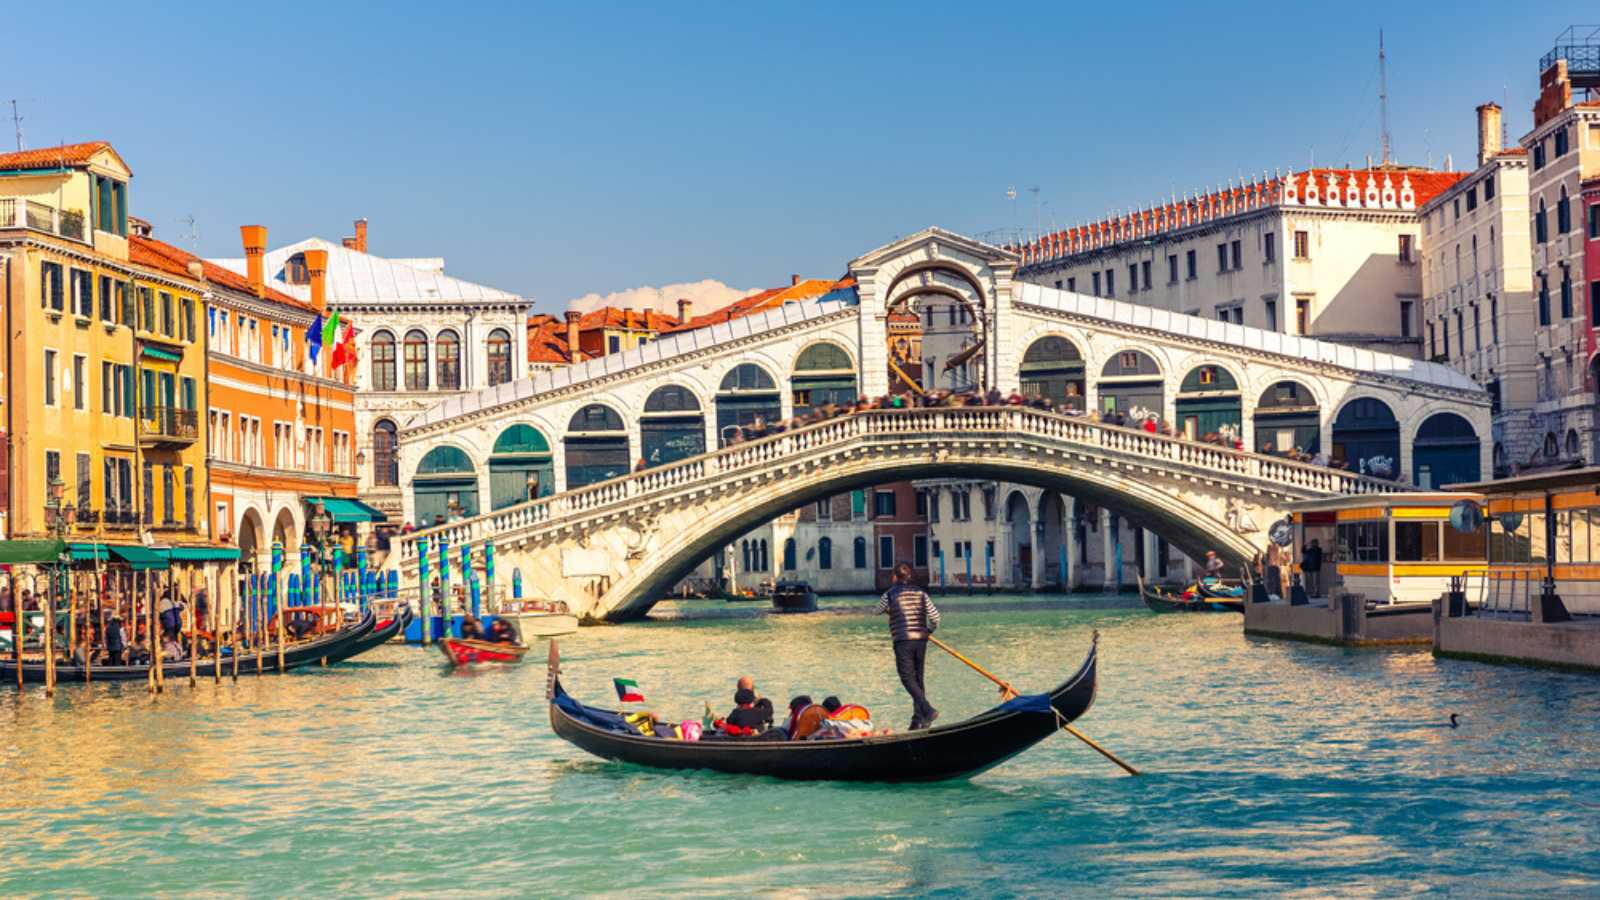 A gondola floats towards Rialto Bridge in Venice, Italy. Gondola rides are common tourist attractions in this popular city.